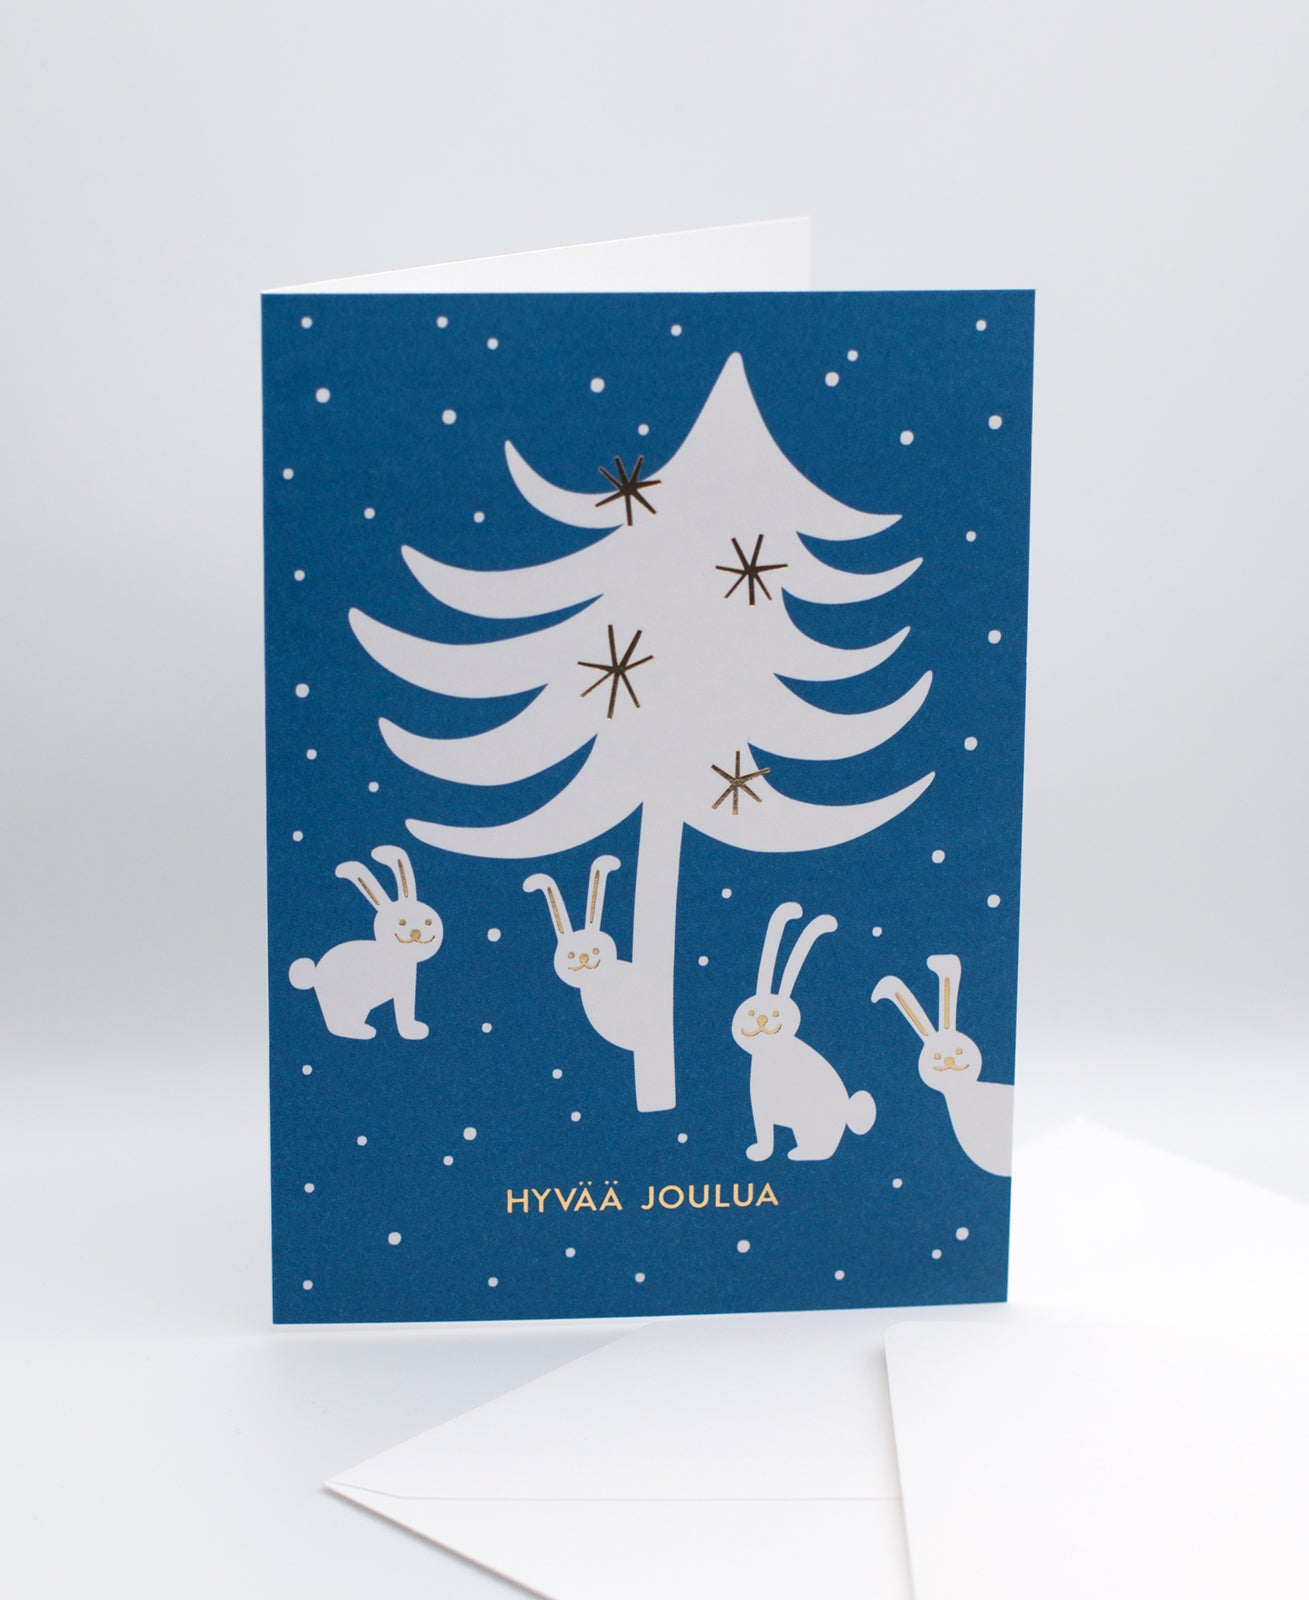 Joulujänikset greeting card and white envelope